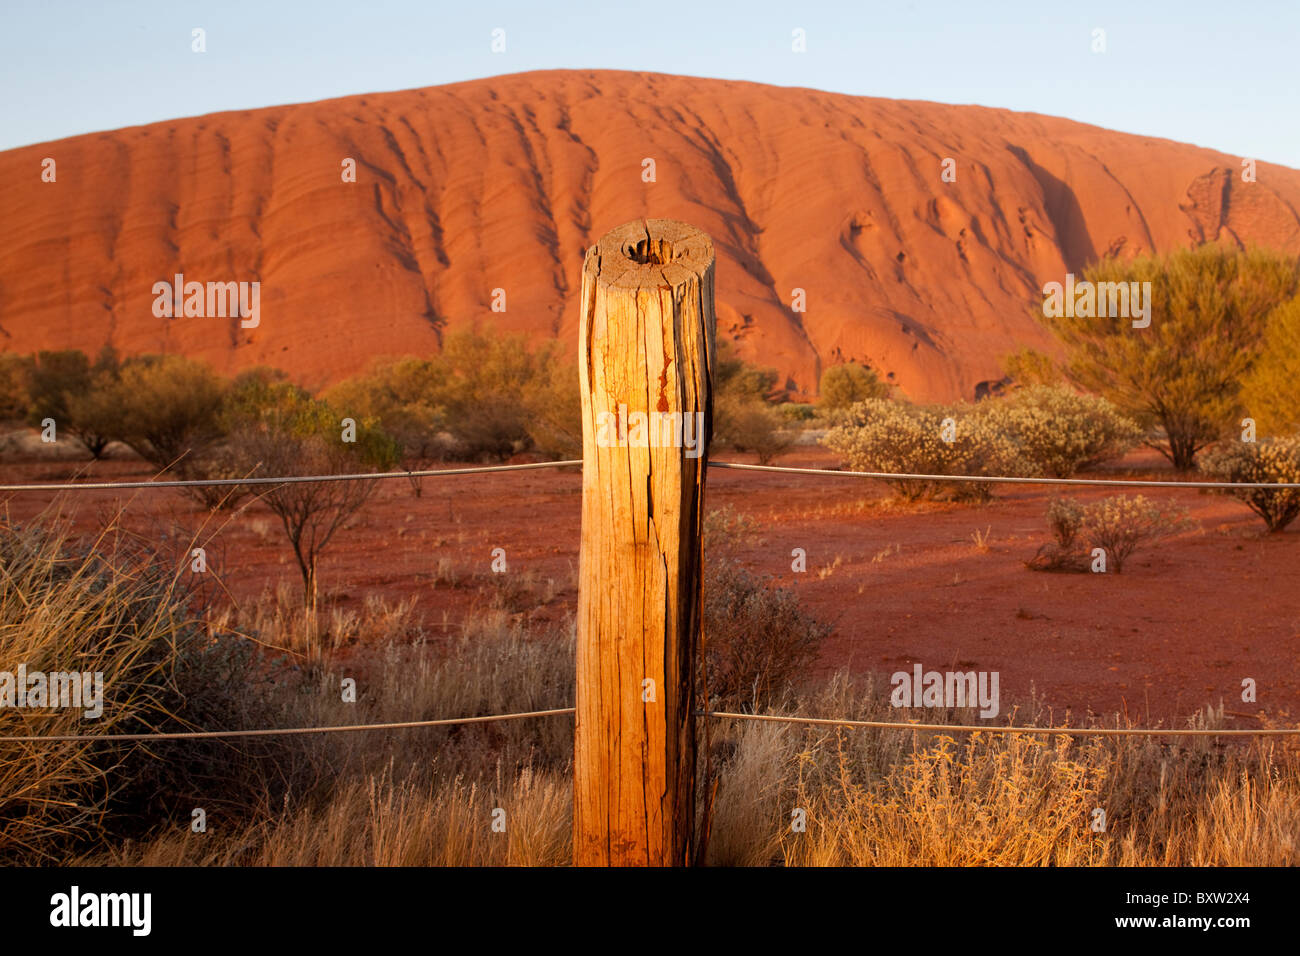 Australien-Northern Territory Uluru - Kata Tjuta National Park hölzernen Zaun am Rand des Parkplatz Bär Basis des Ayers Rock Stockfoto